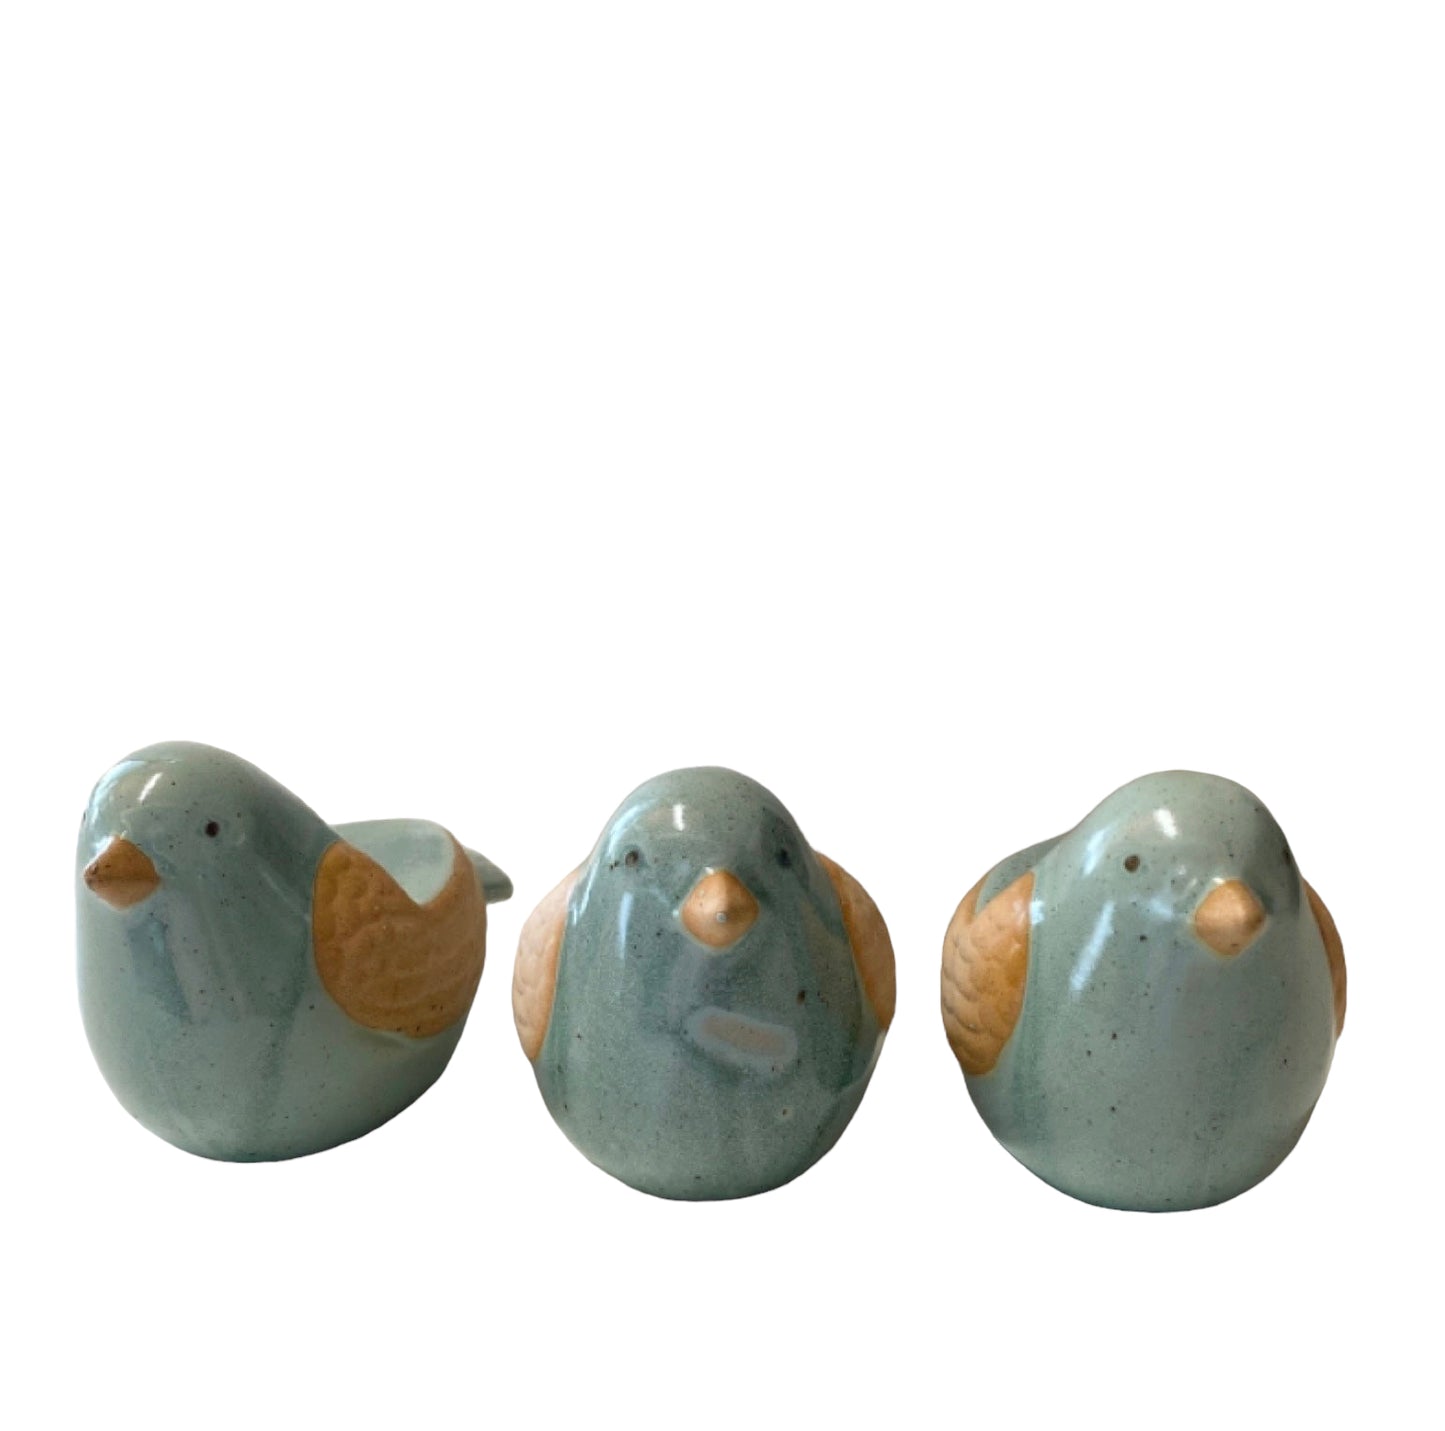 Pot Plant Feet Bird Cuties Set of 3 Aqua - The Renmy Store Homewares & Gifts 